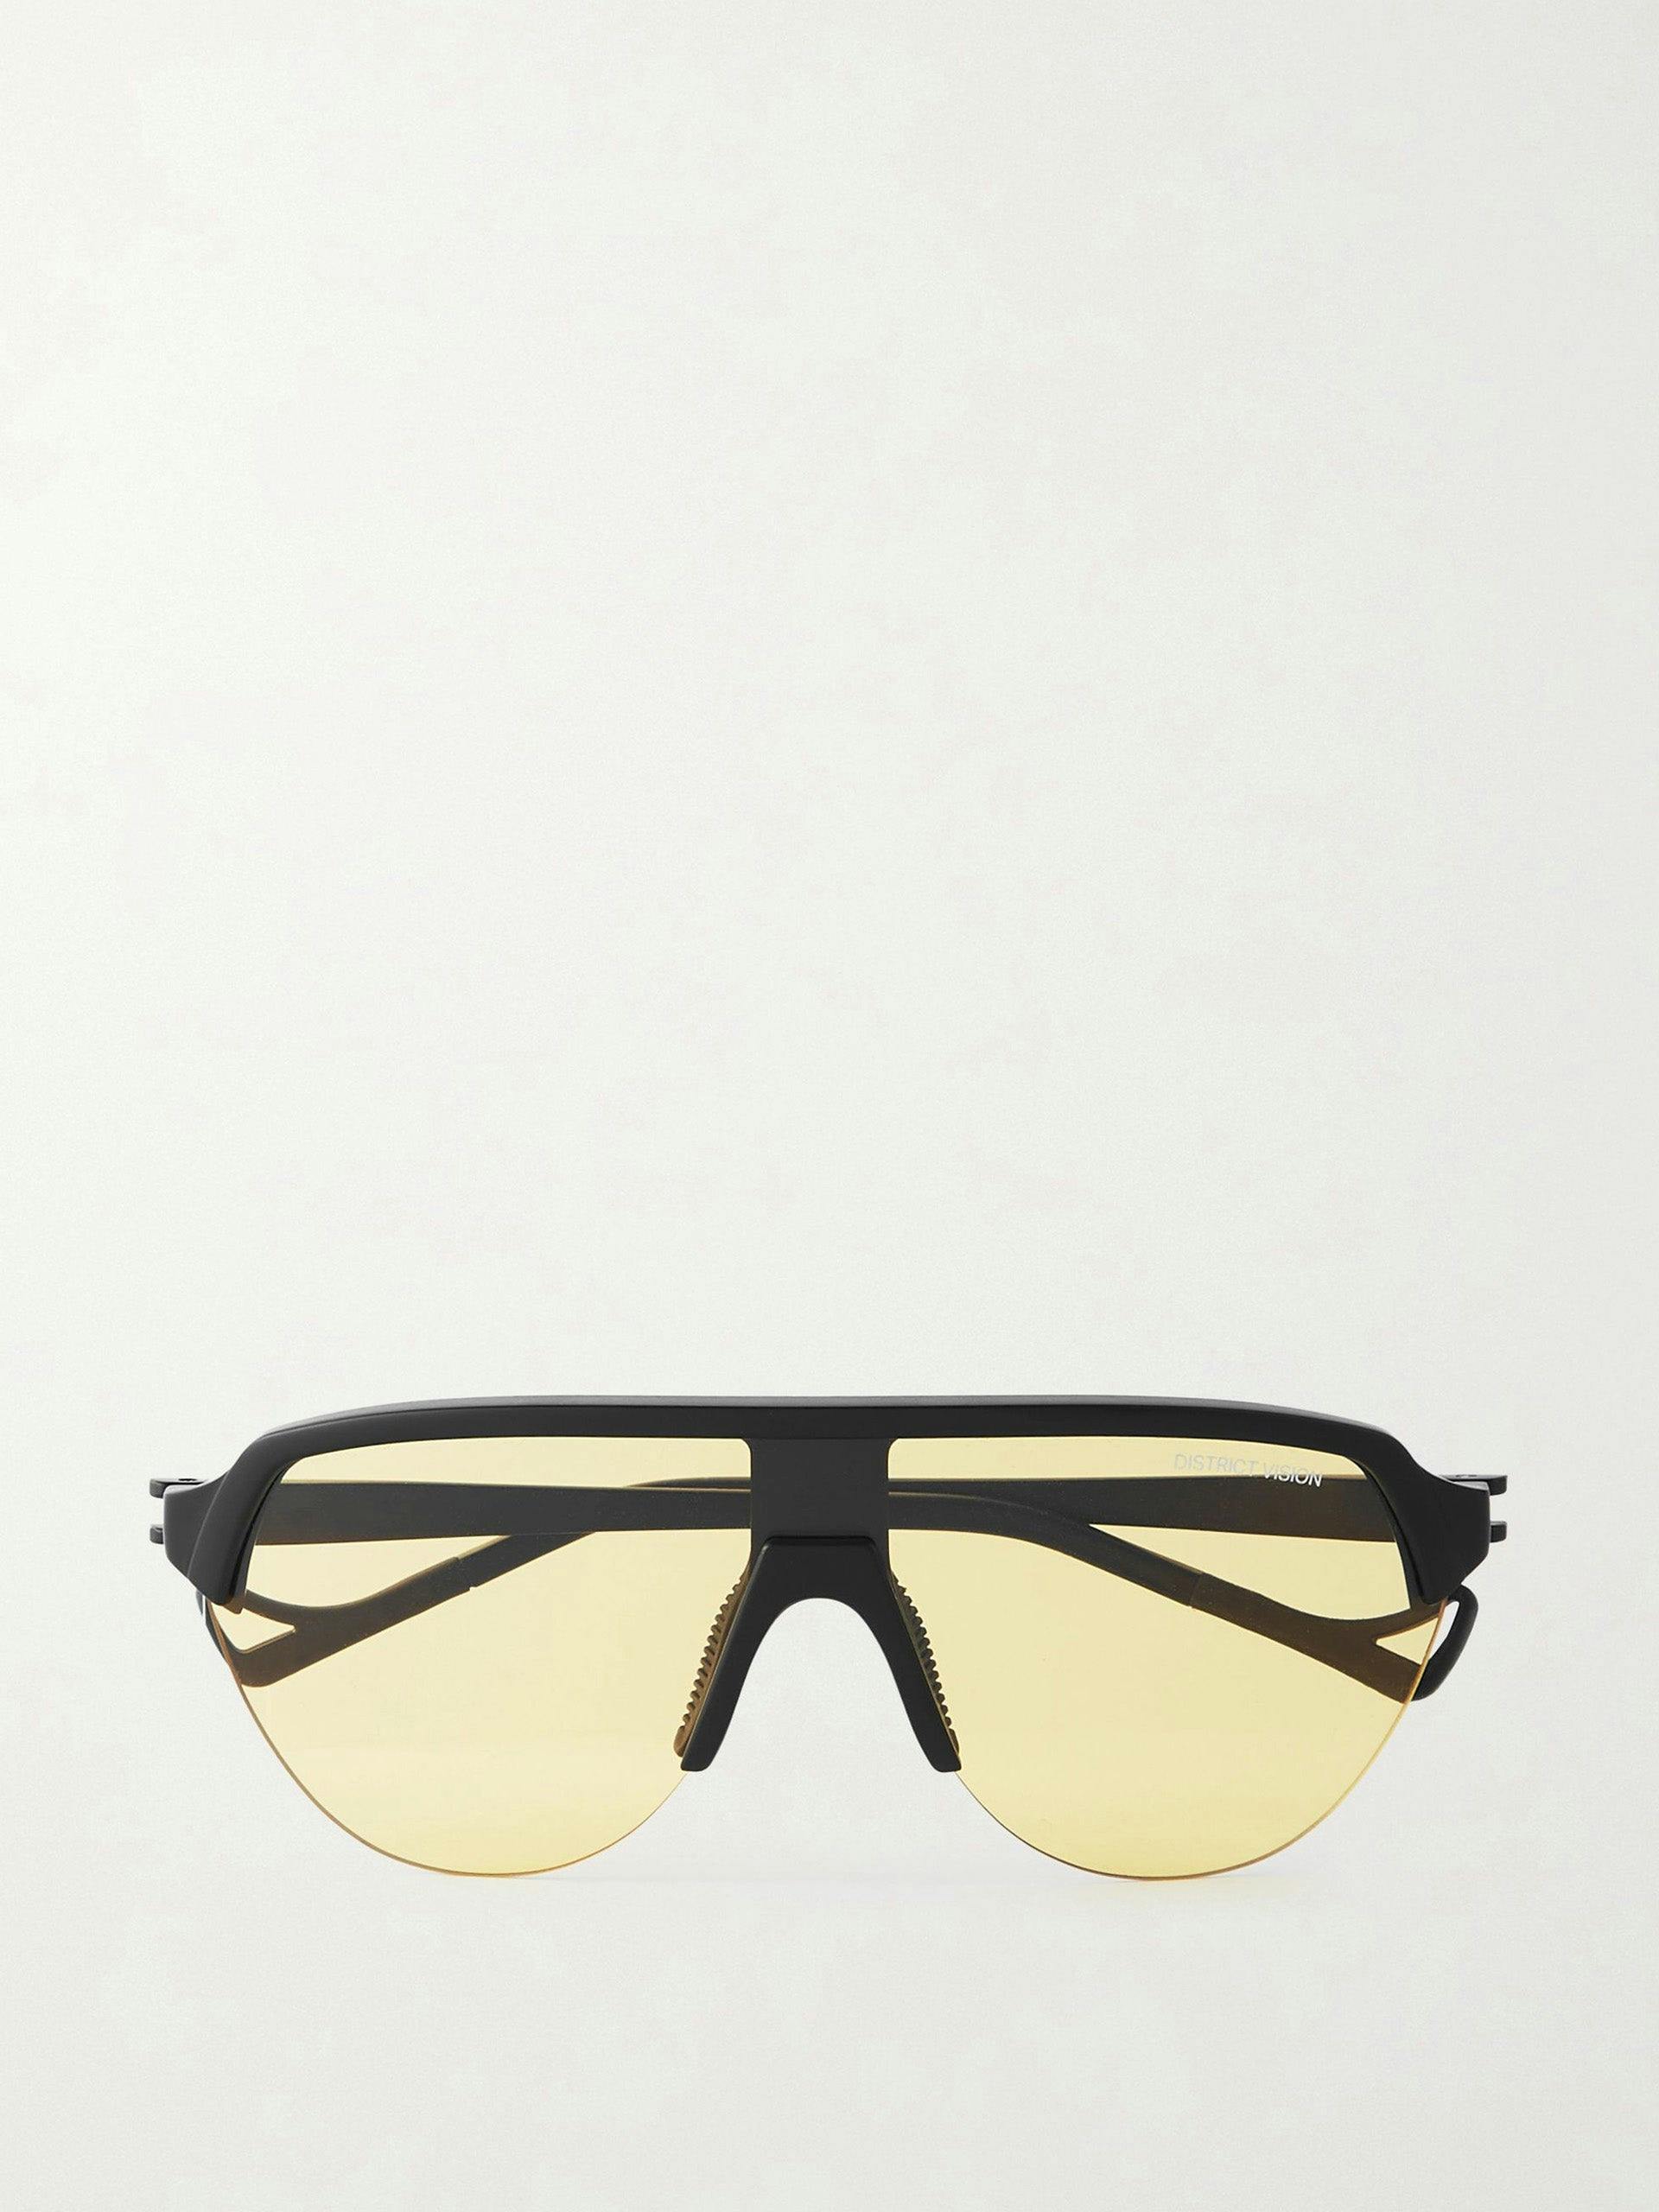 Nagata Speed Blade D-frame sunglasses in Yellow